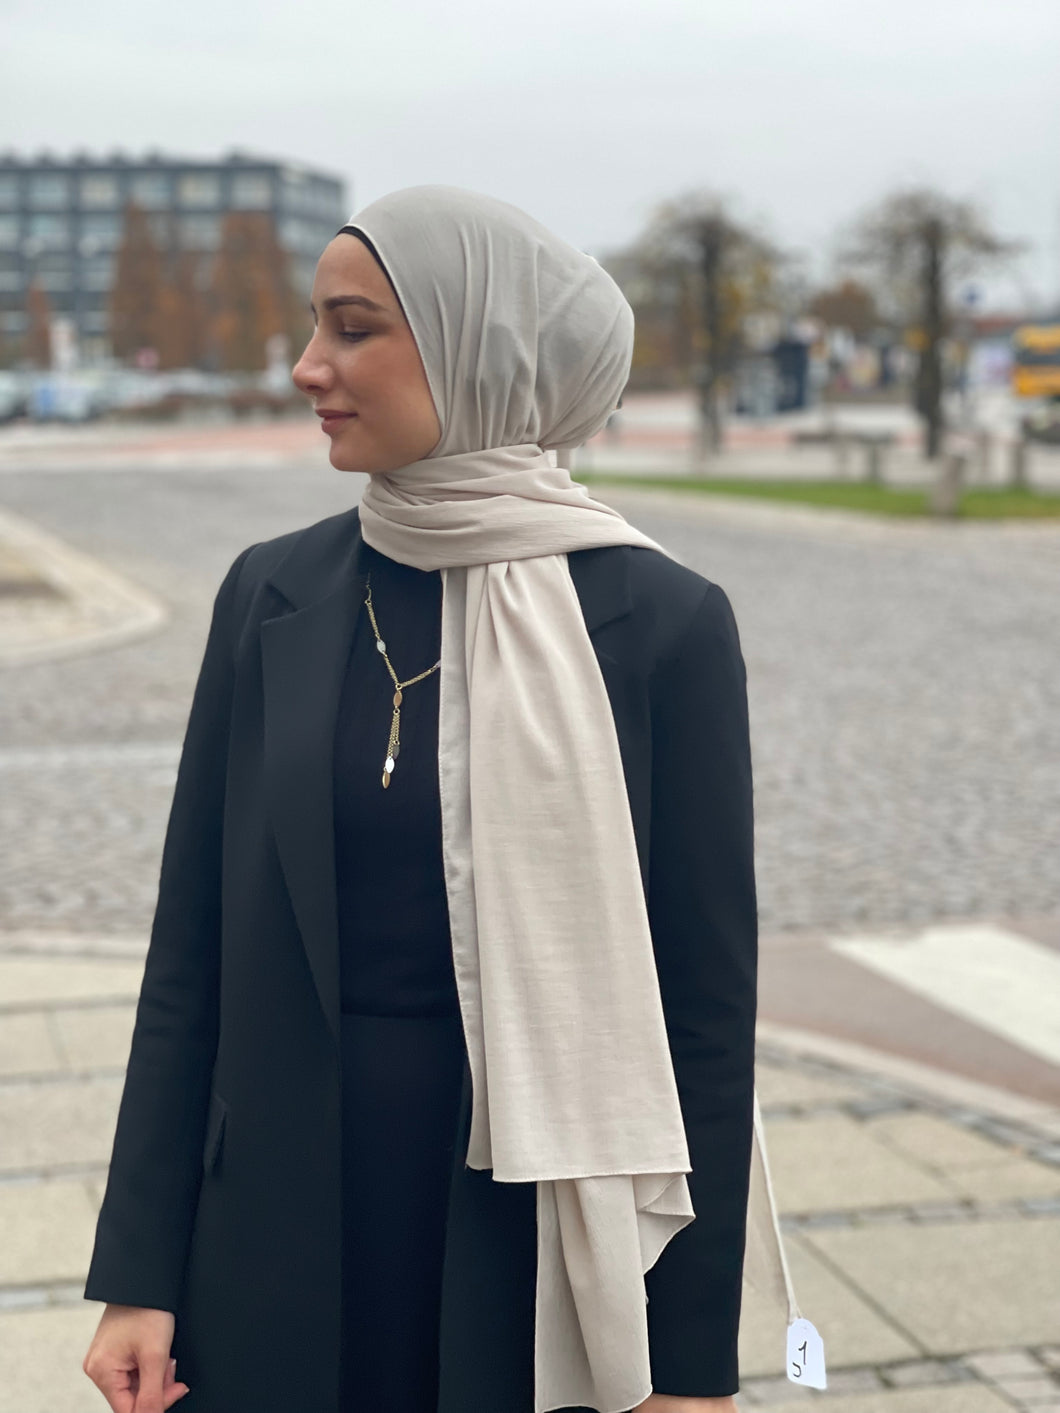 Crepe Chiffon Hijab - Elfenben